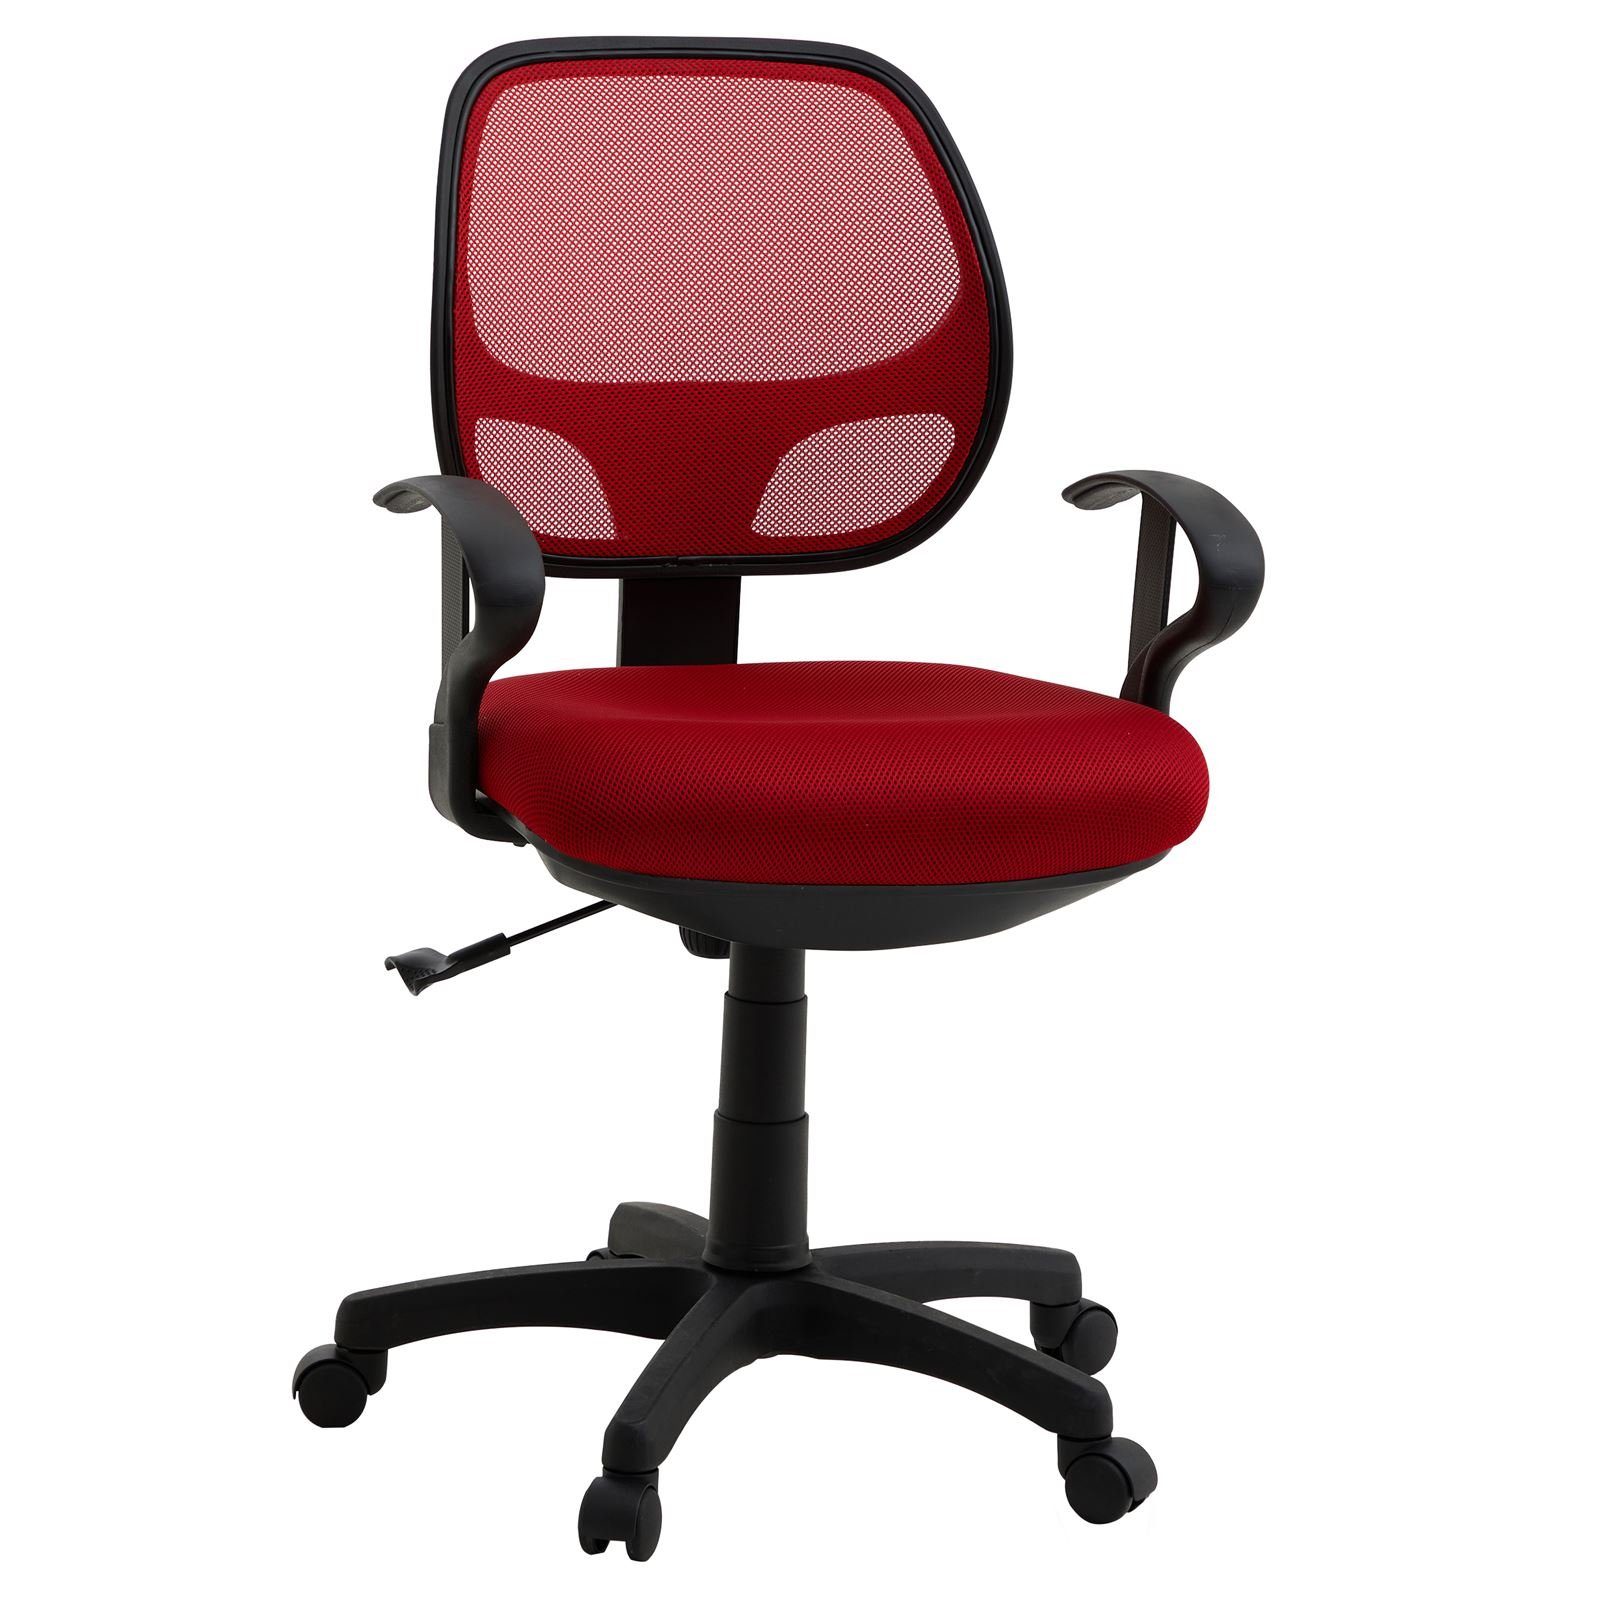 Bezug rot Schreibtischstuhl IDIMEX Drehstuhl atmungsaktiver COOL, Drehstuhl Farba Kinderdrehstuhl